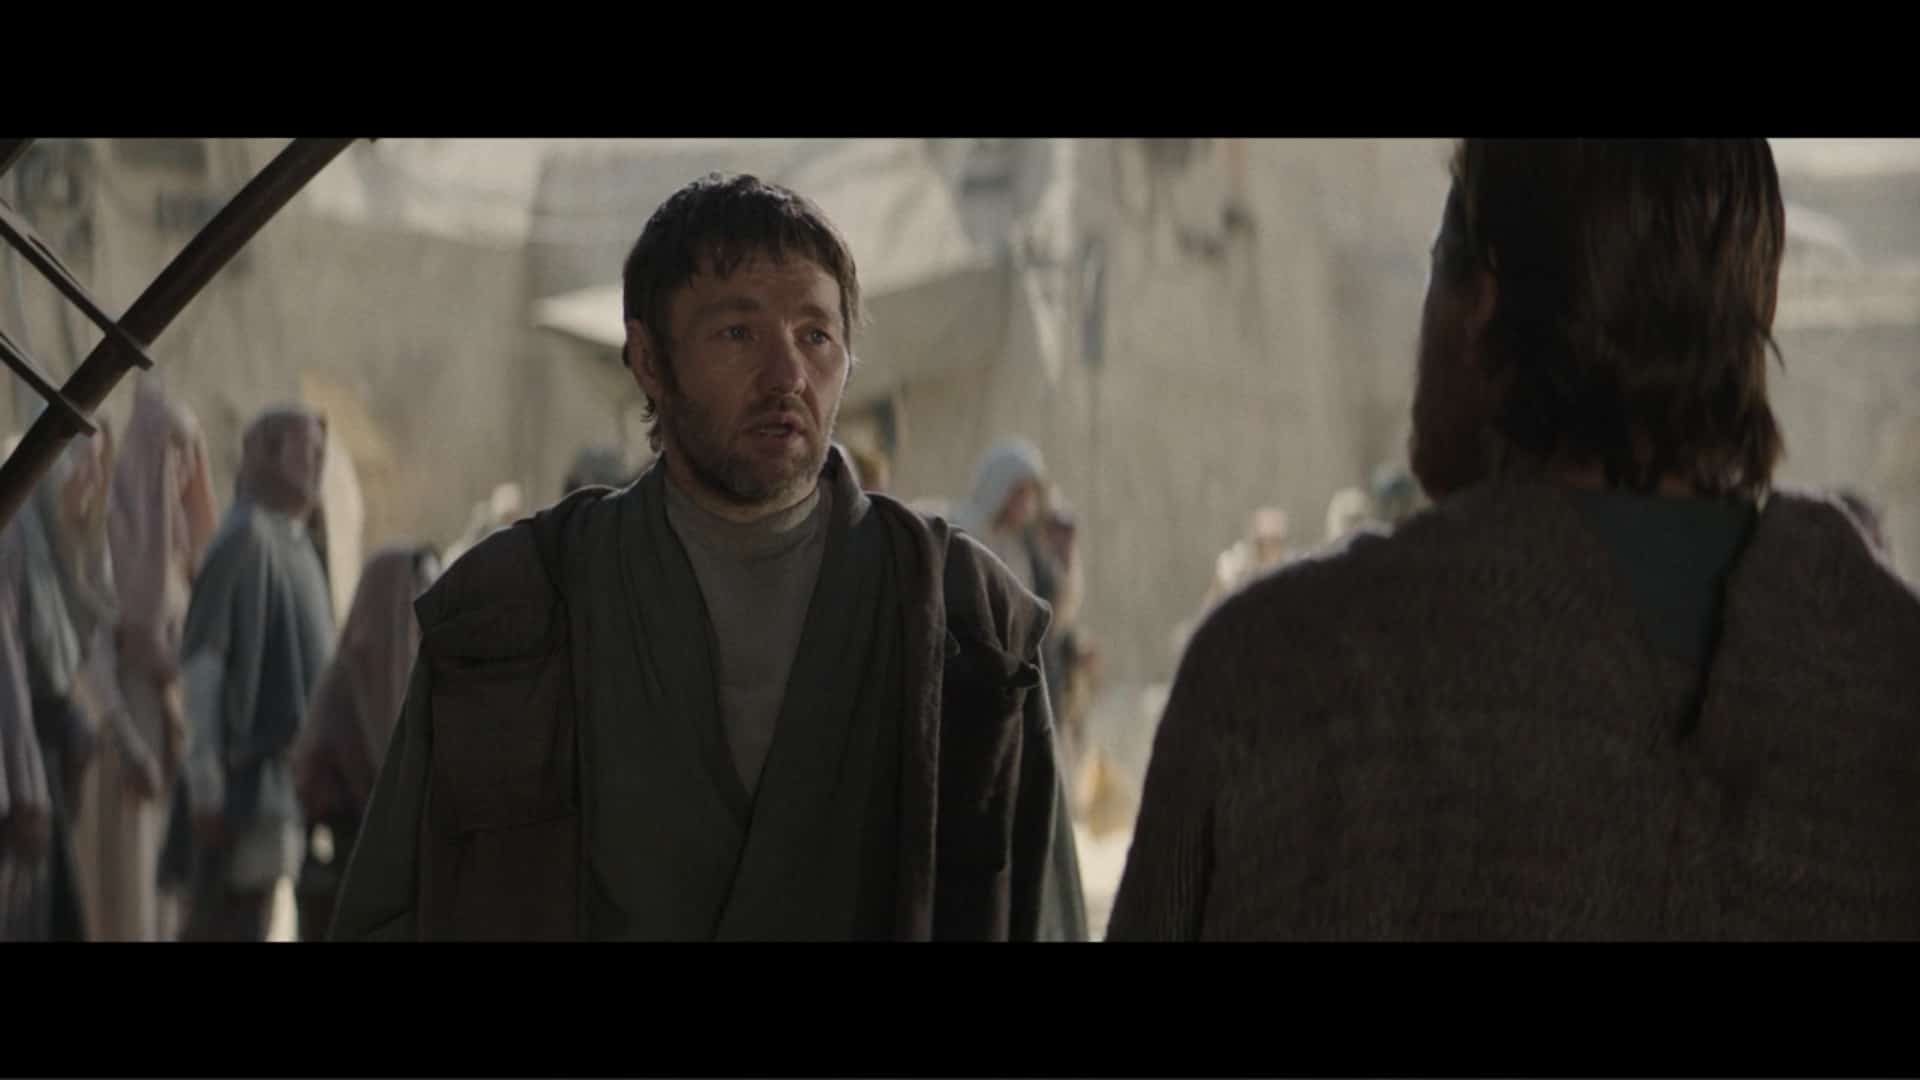 Owen Joel Edgerton) telling Obi-Wan to back off